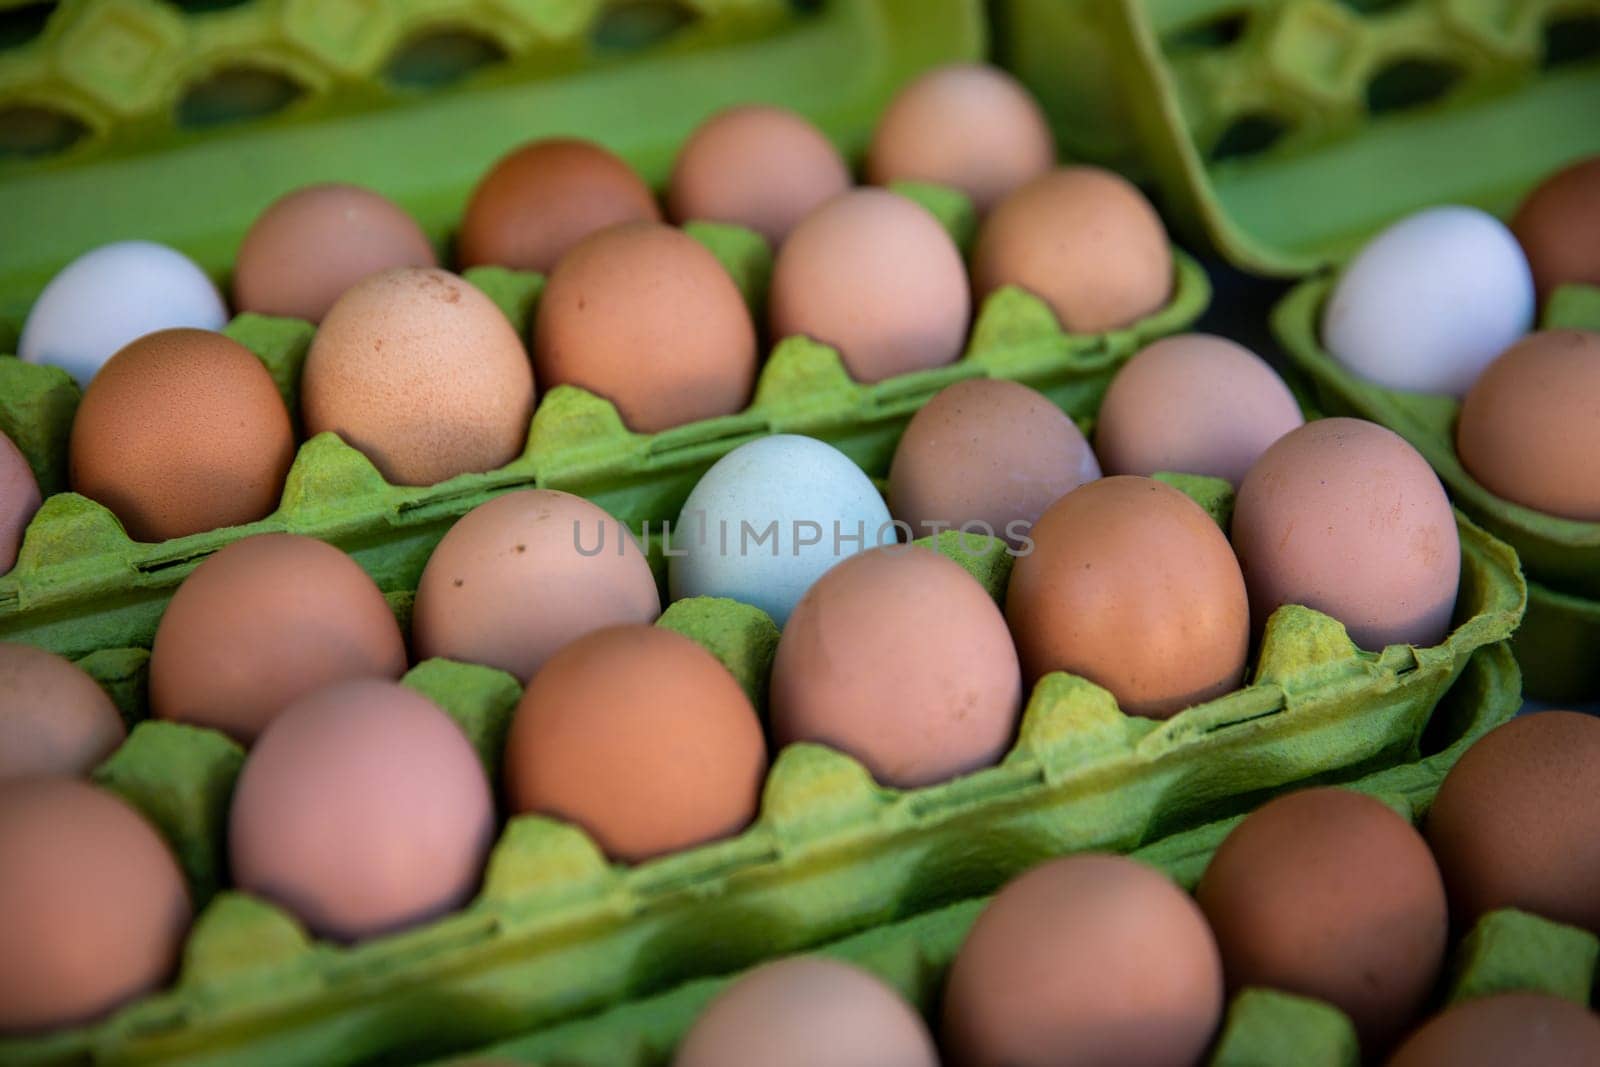 Farm Fresh Organic Eggs in cartons at a market